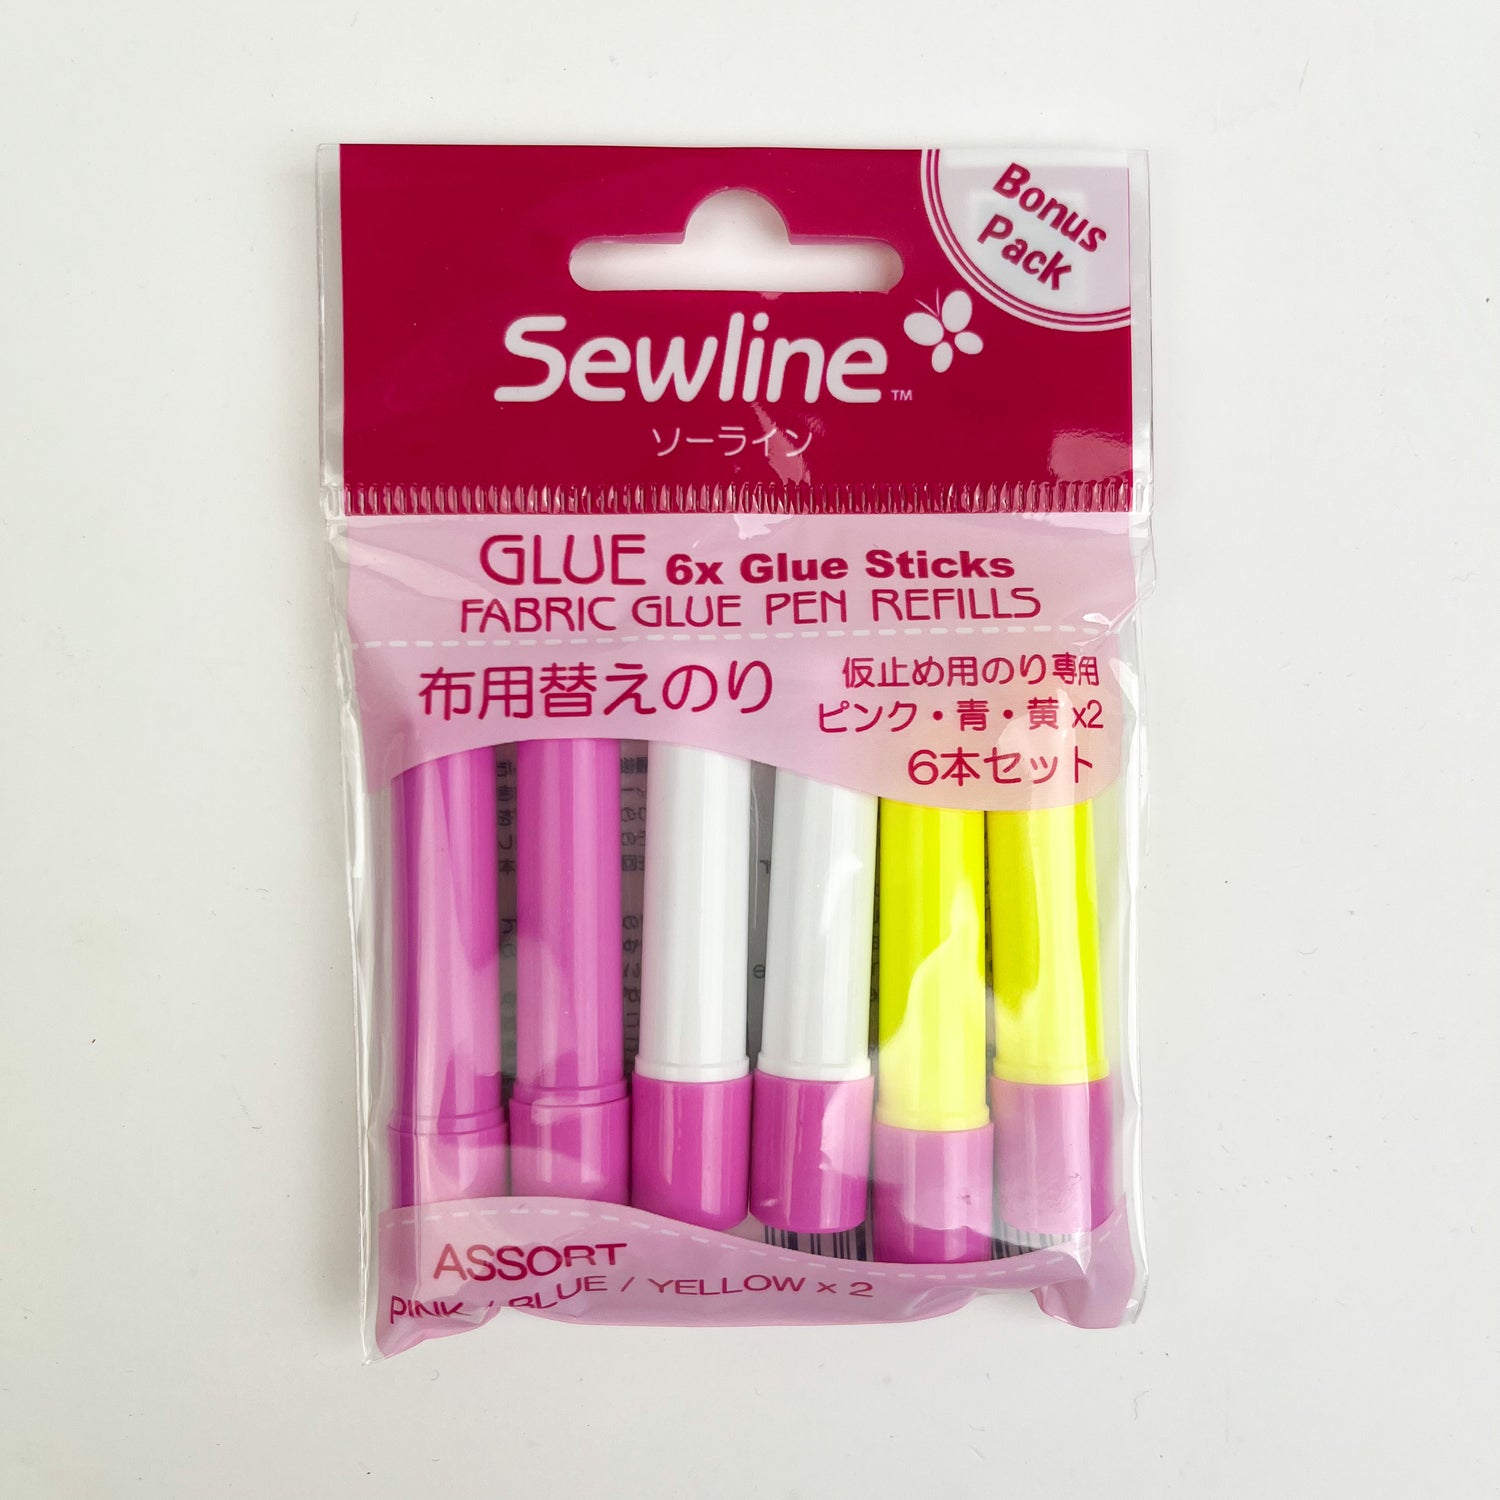 Sewline Fabric Glue Pen Refills Bonus Pack 6 Glue Pen Refills, 6 X